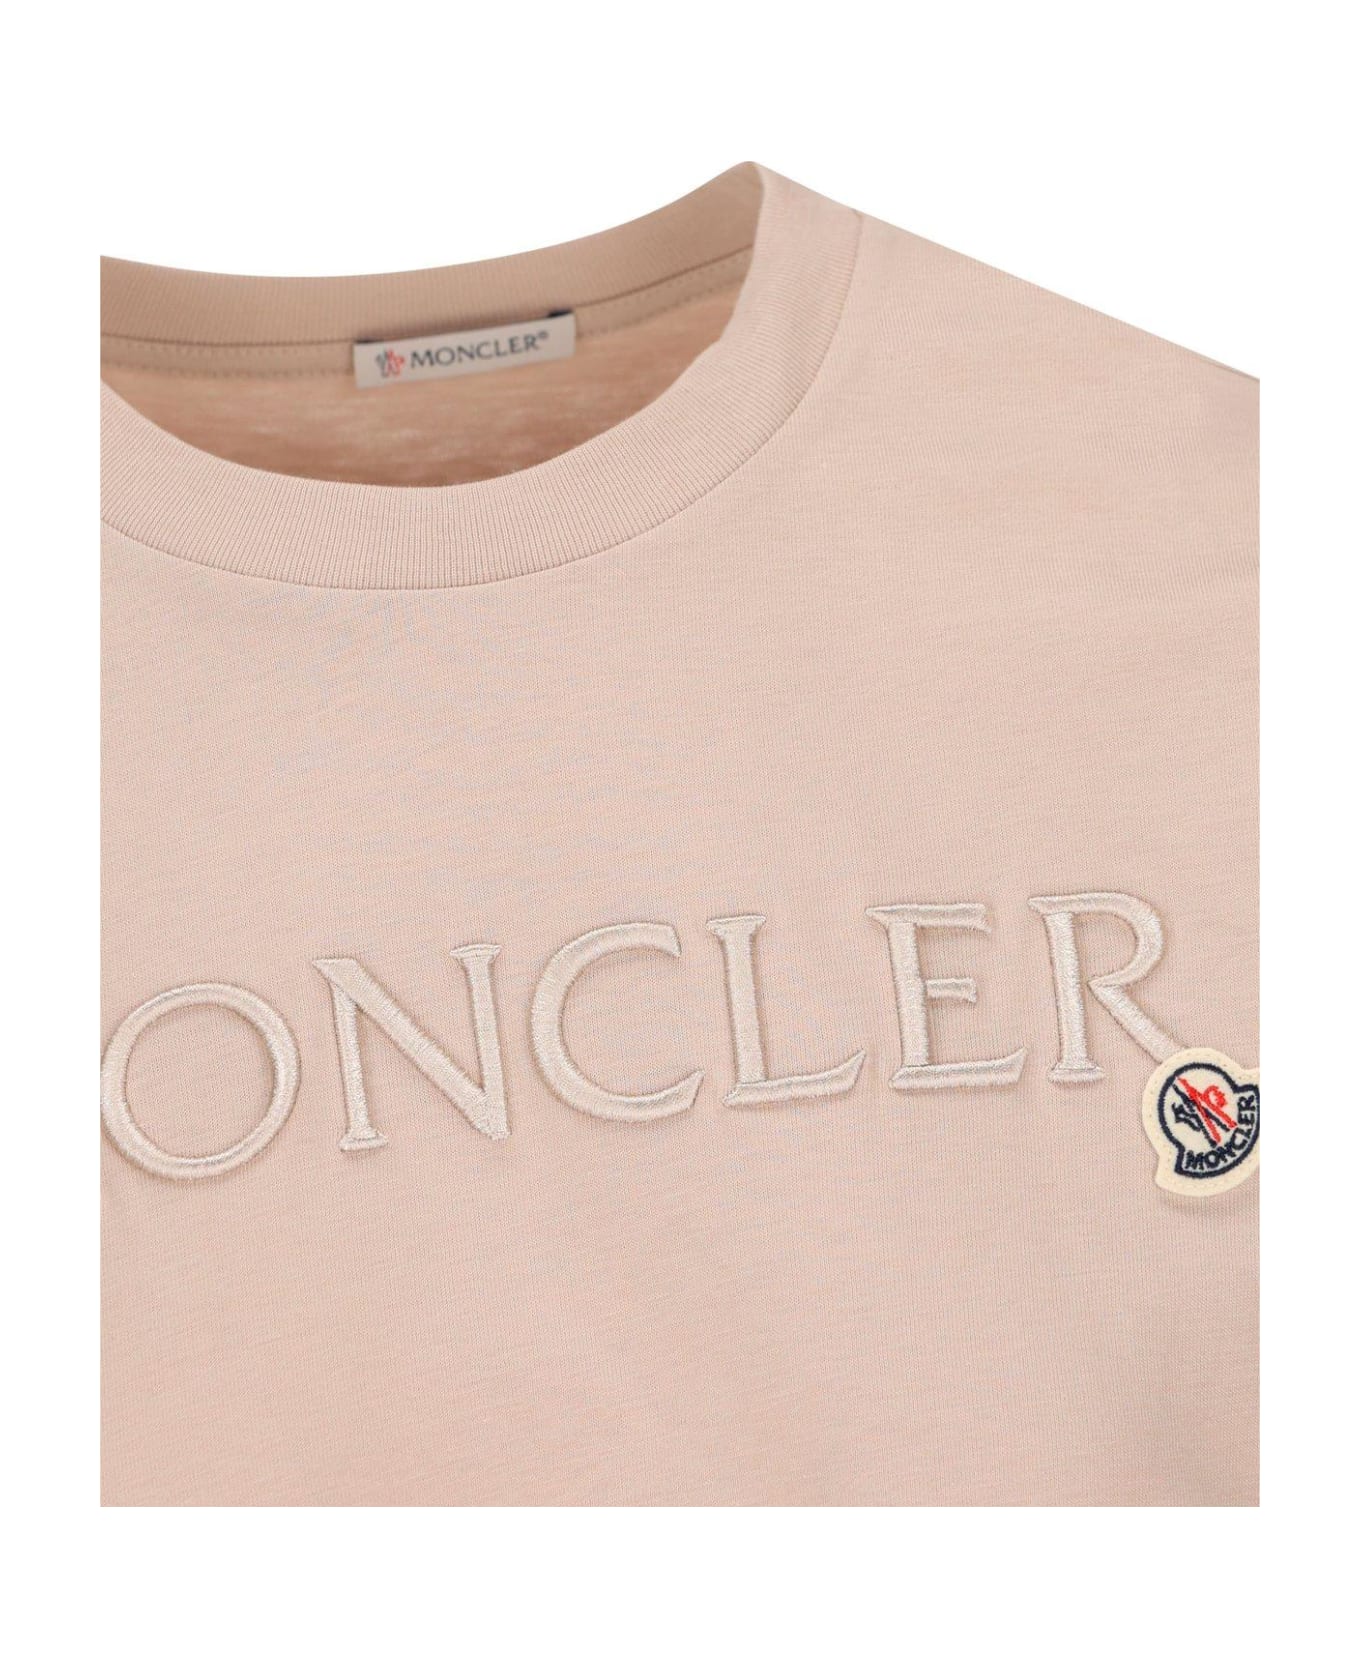 Moncler Logo Embroidered Crewneck T-shirt - Beige Tシャツ